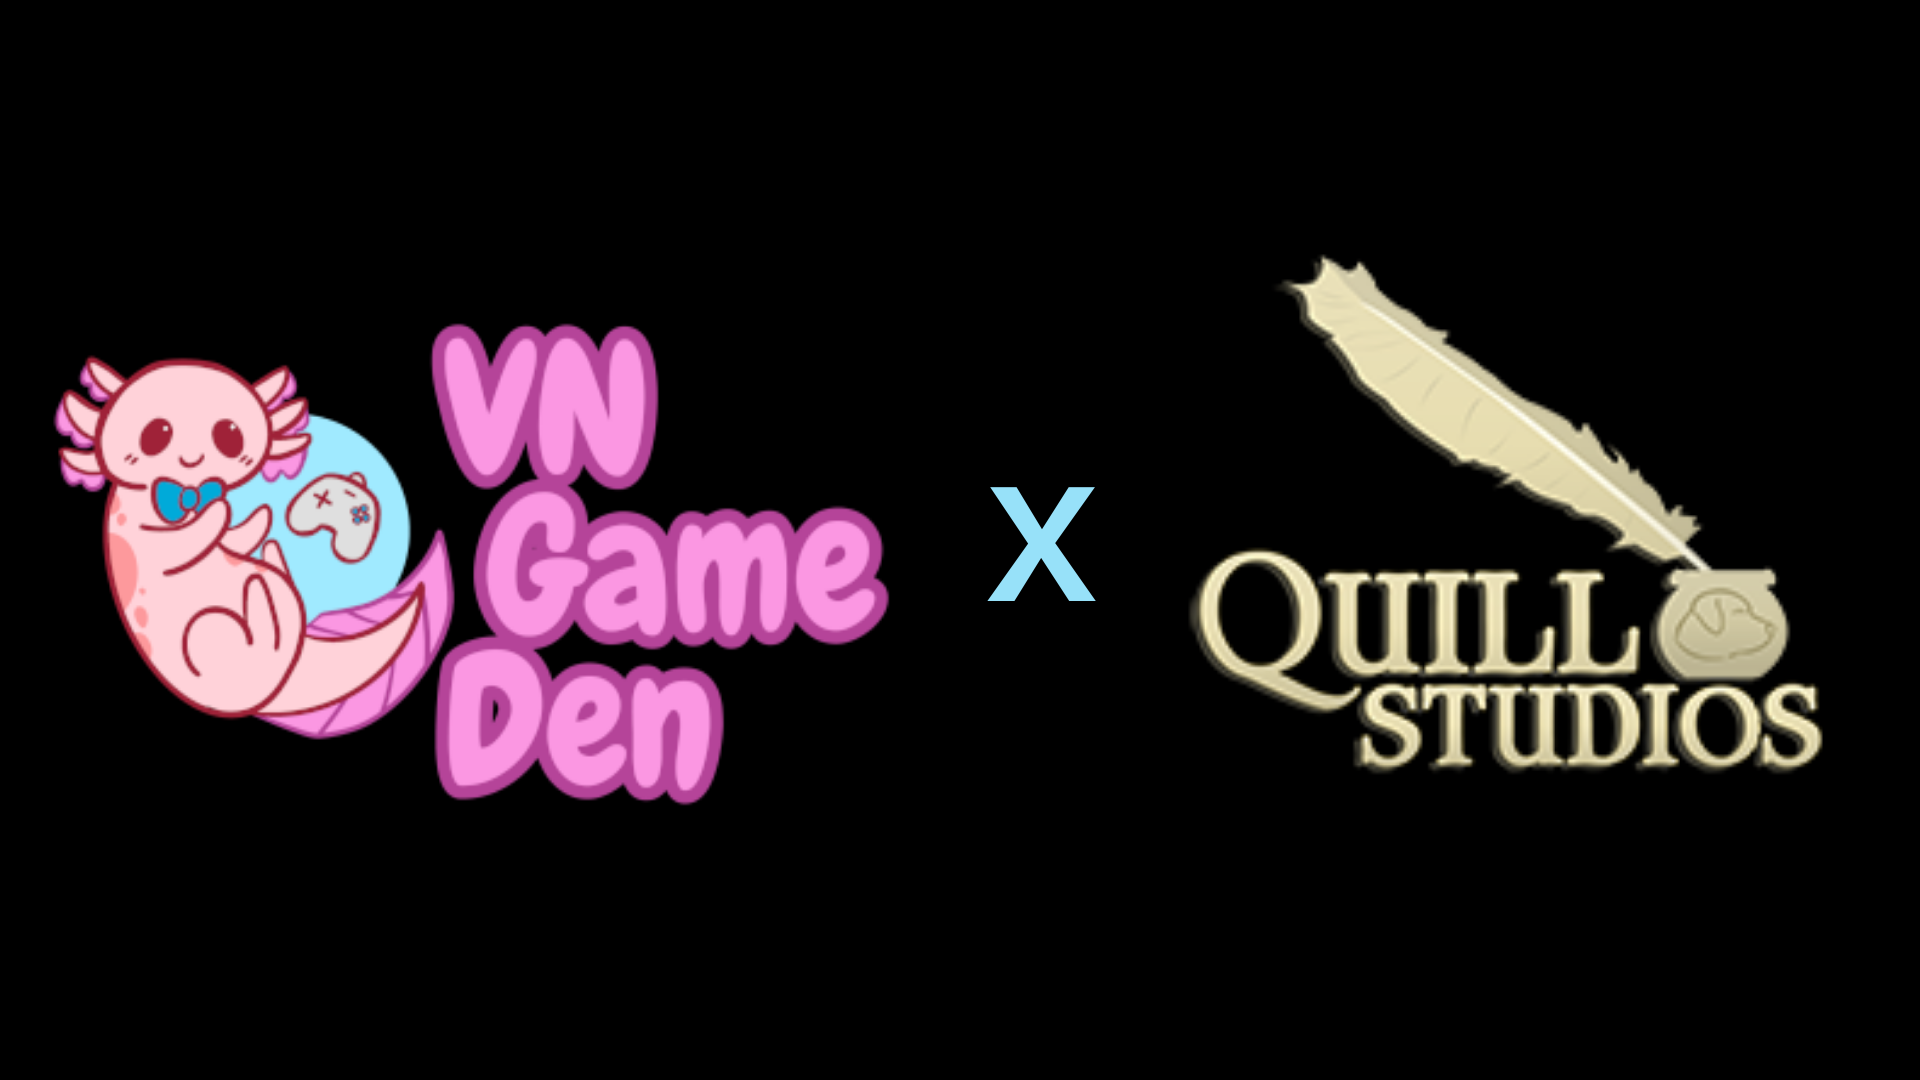 VN Game Den X Quill Studios